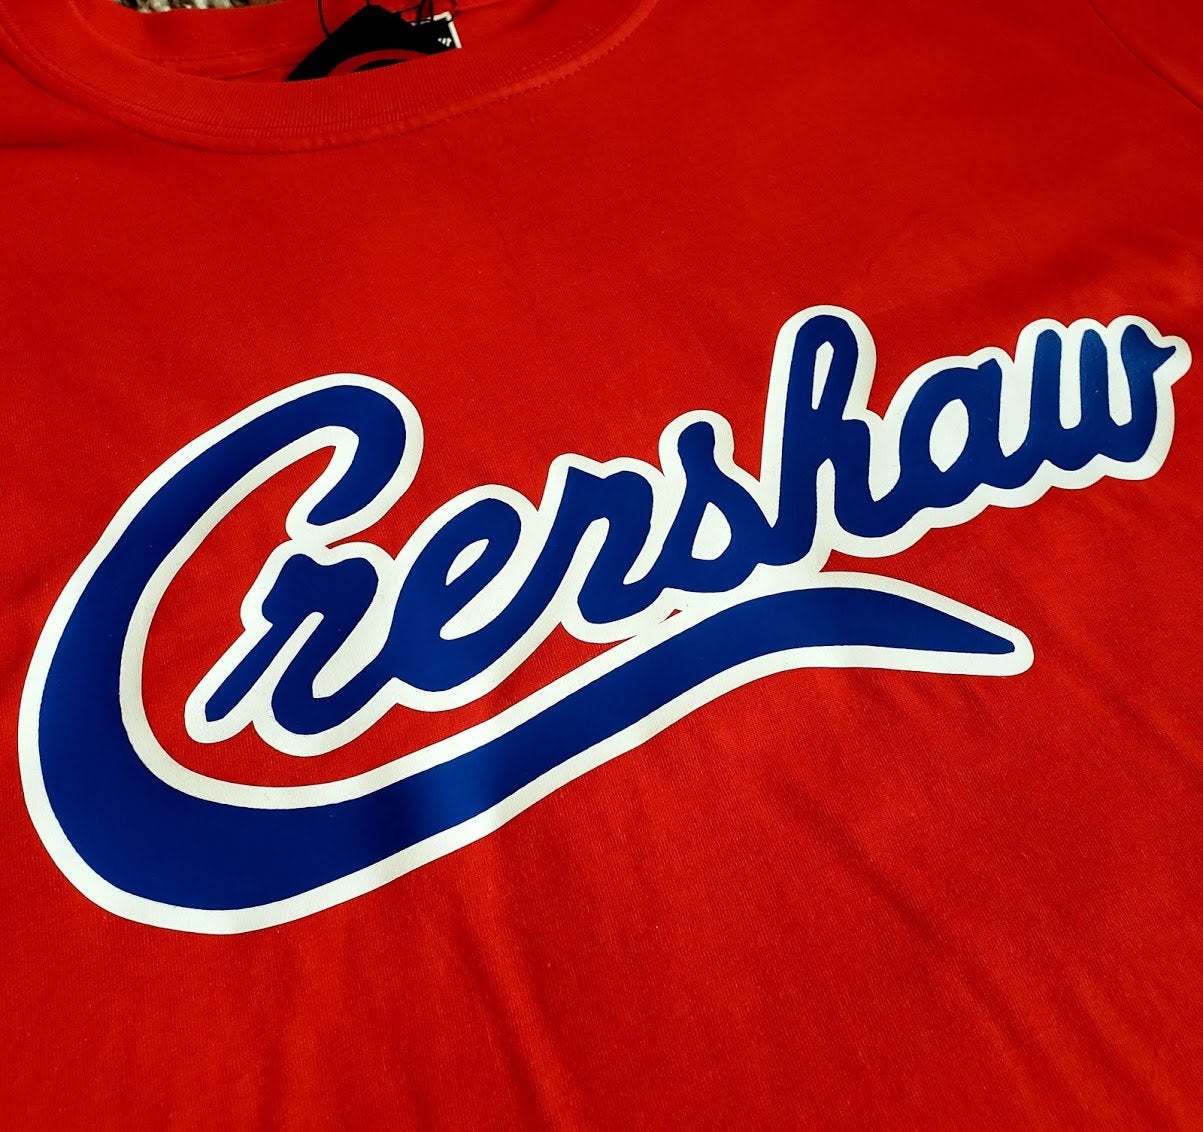 red crenshaw shirt